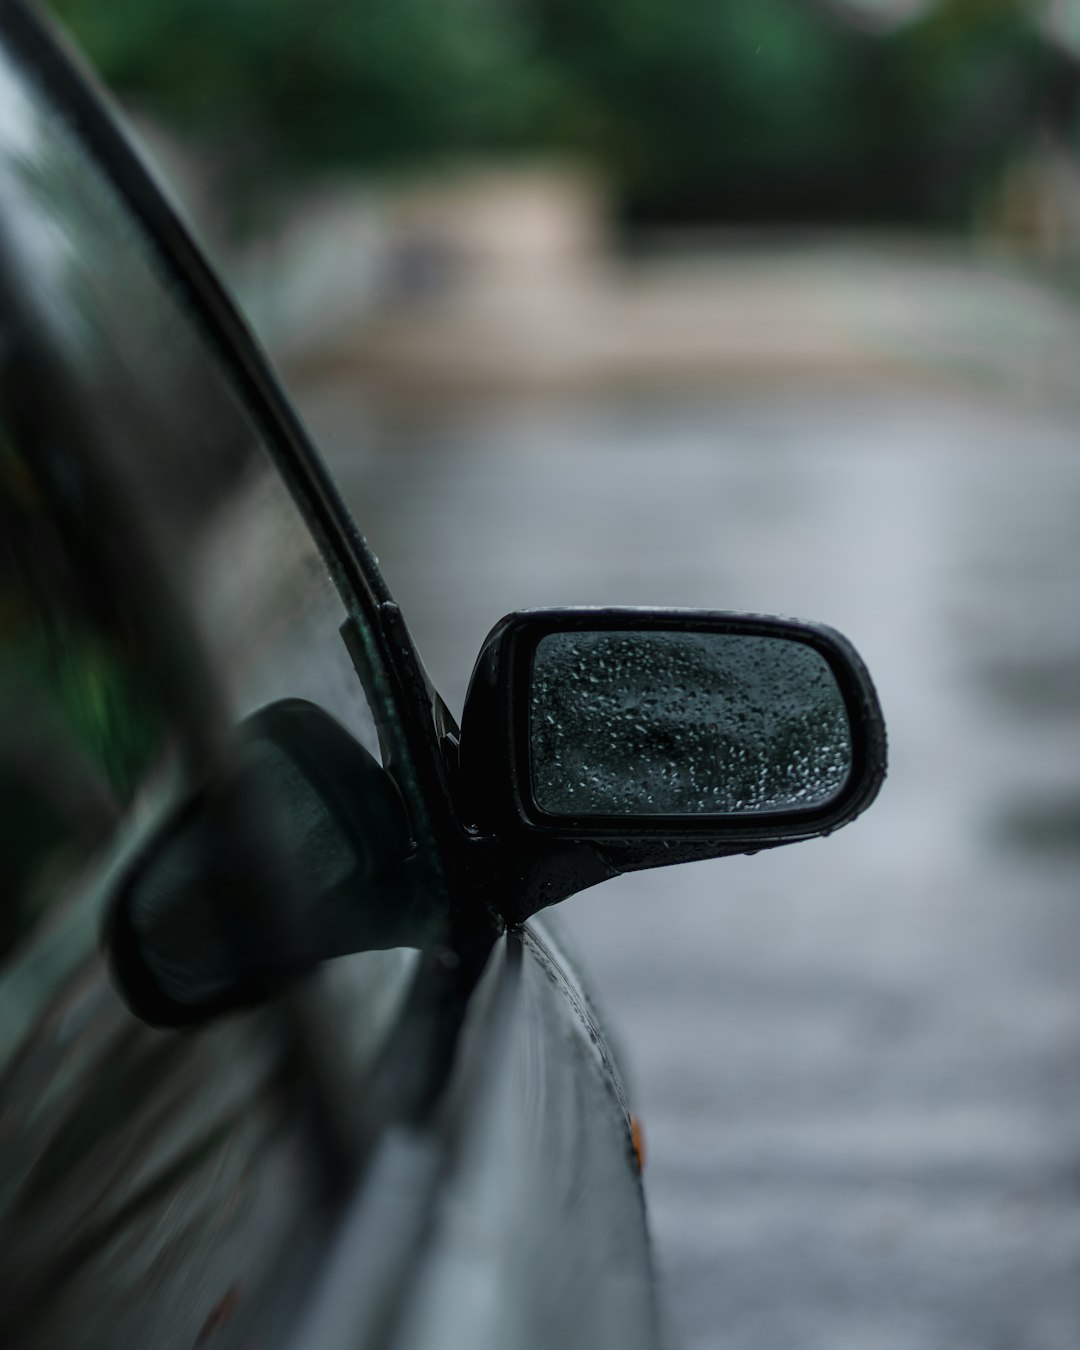 wet vehicle side mirror